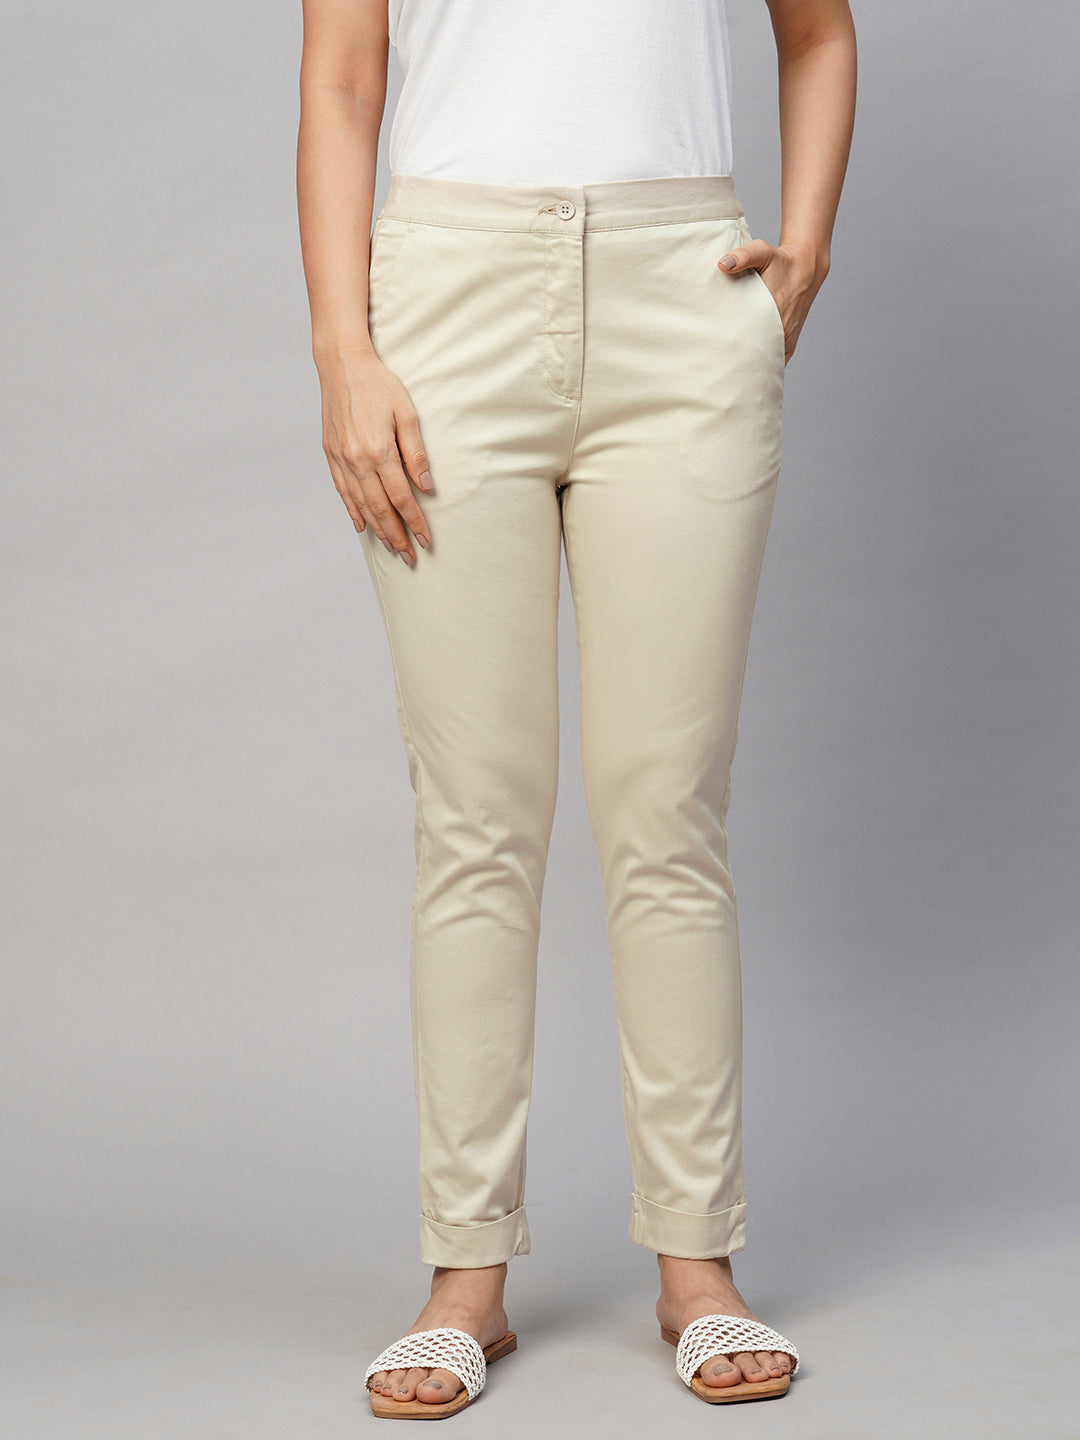 Creased Pants - Cream - Ladies | H&M US